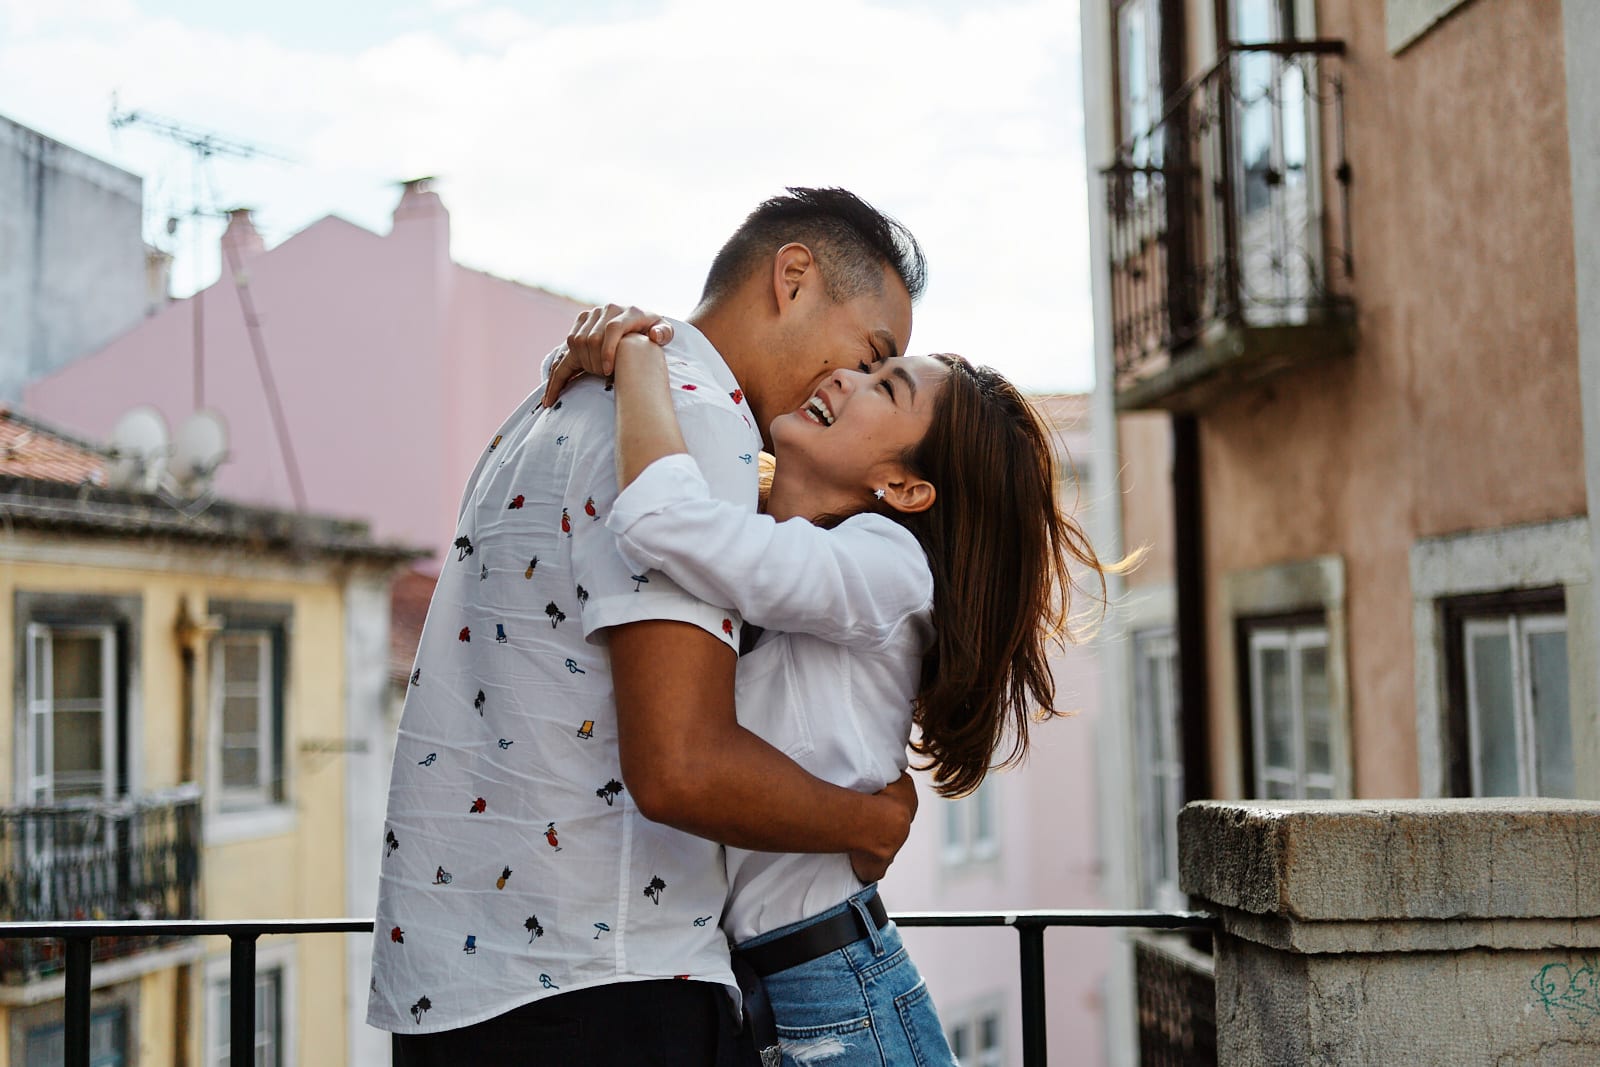 Eliza Sam hugs her husband Joshua Ngo as part of a romantic photoshoot in Lisbon